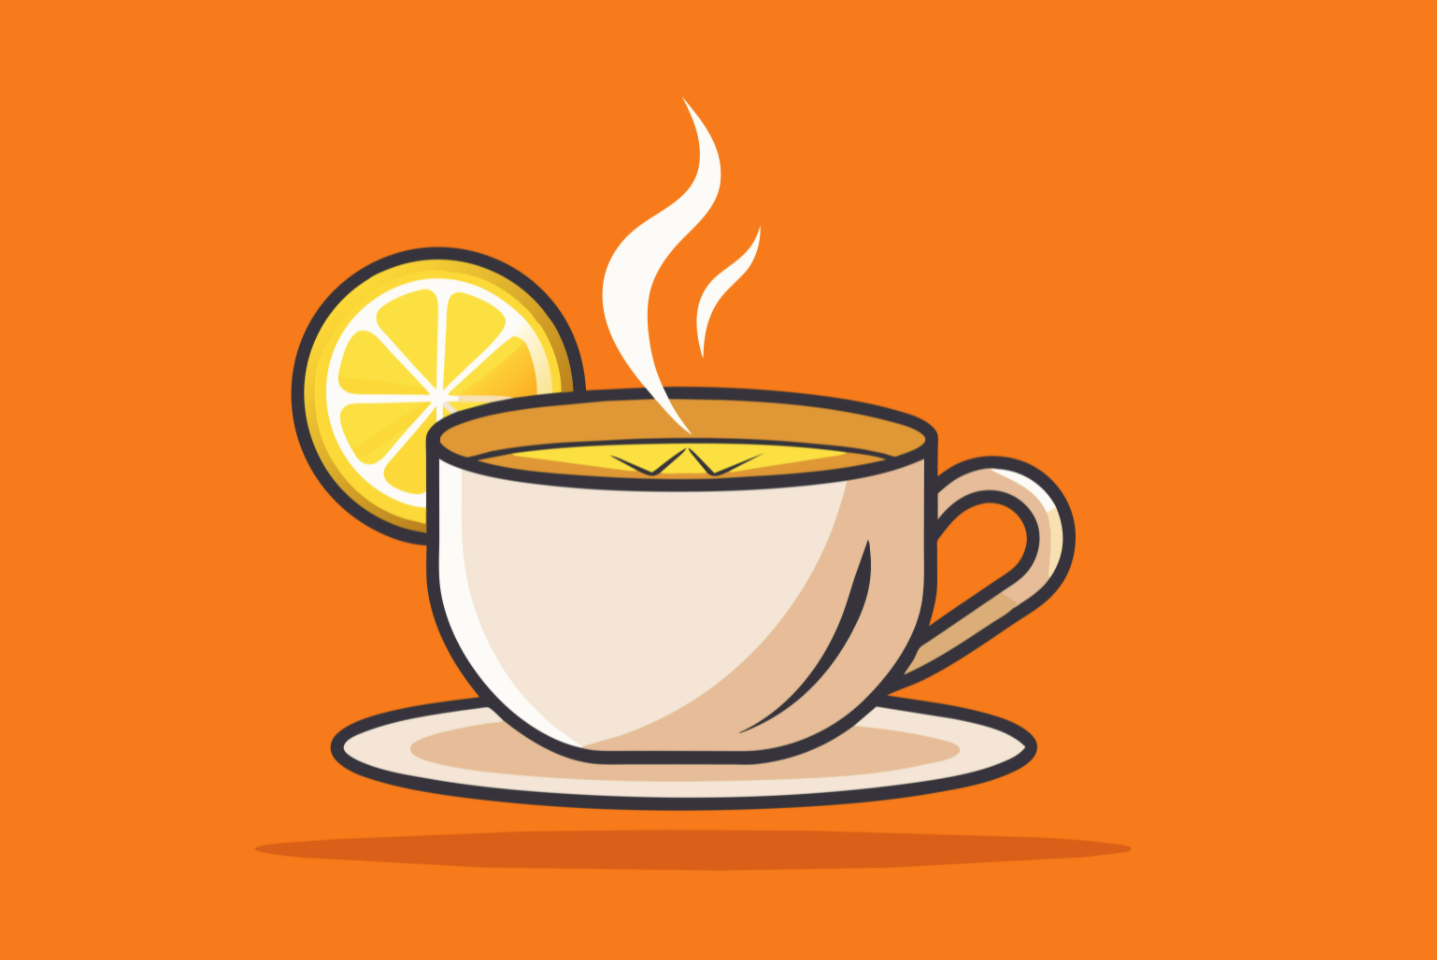 a cup of tea with a lemon slice